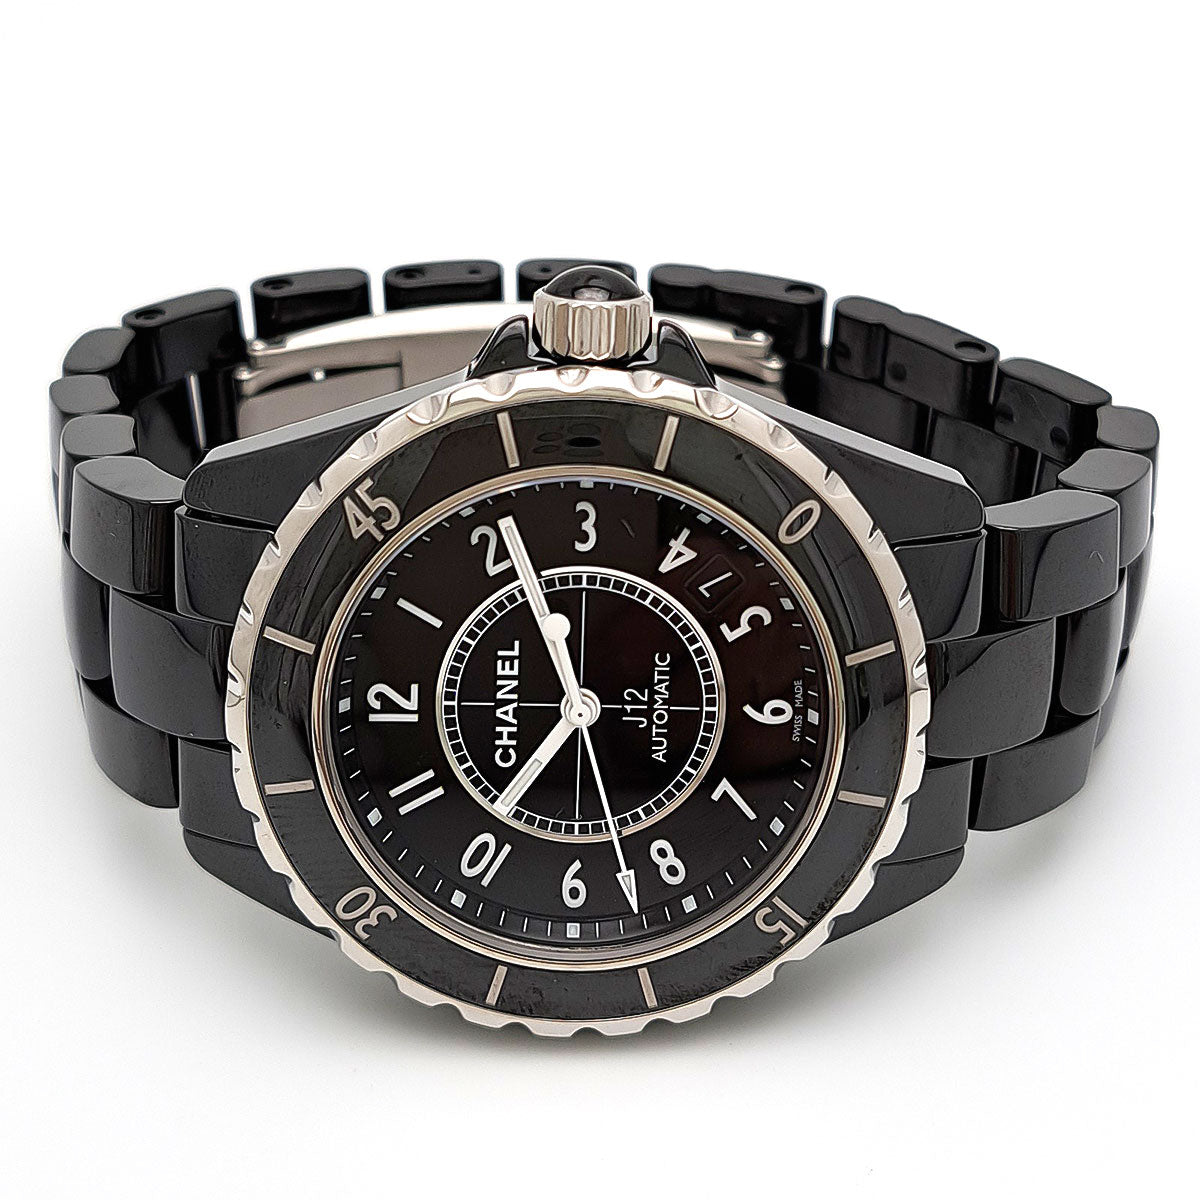 Automatic J12 Wrist Watch H0685